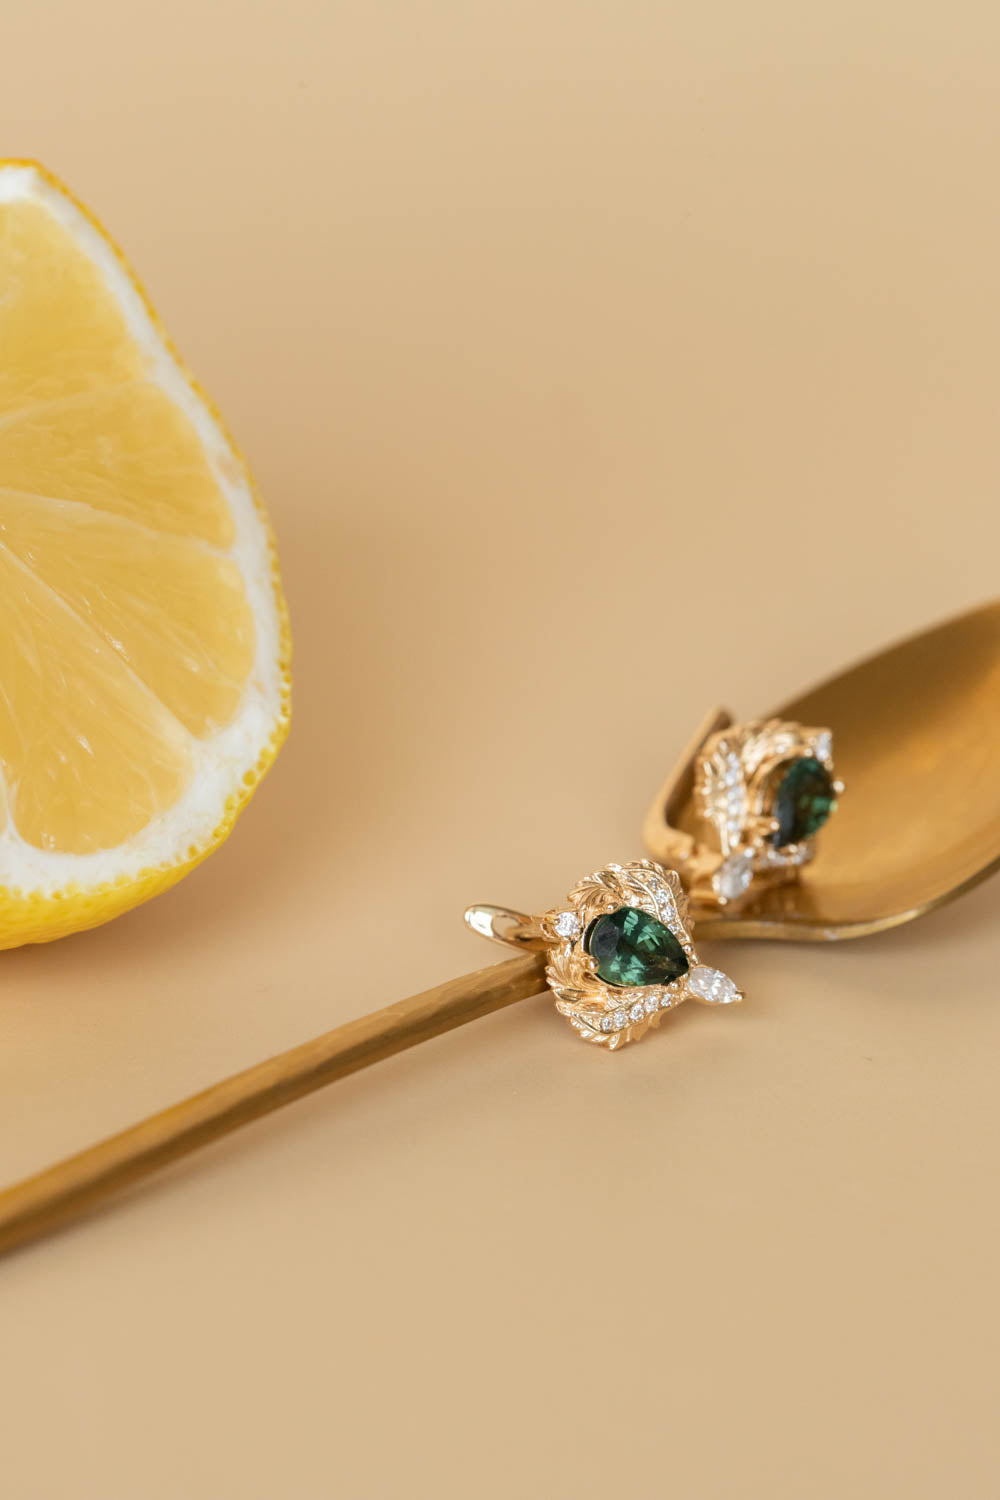 Green sapphire earrings, nature inspired earrings with diamonds / Adonis earrings - Eden Garden Jewelry™